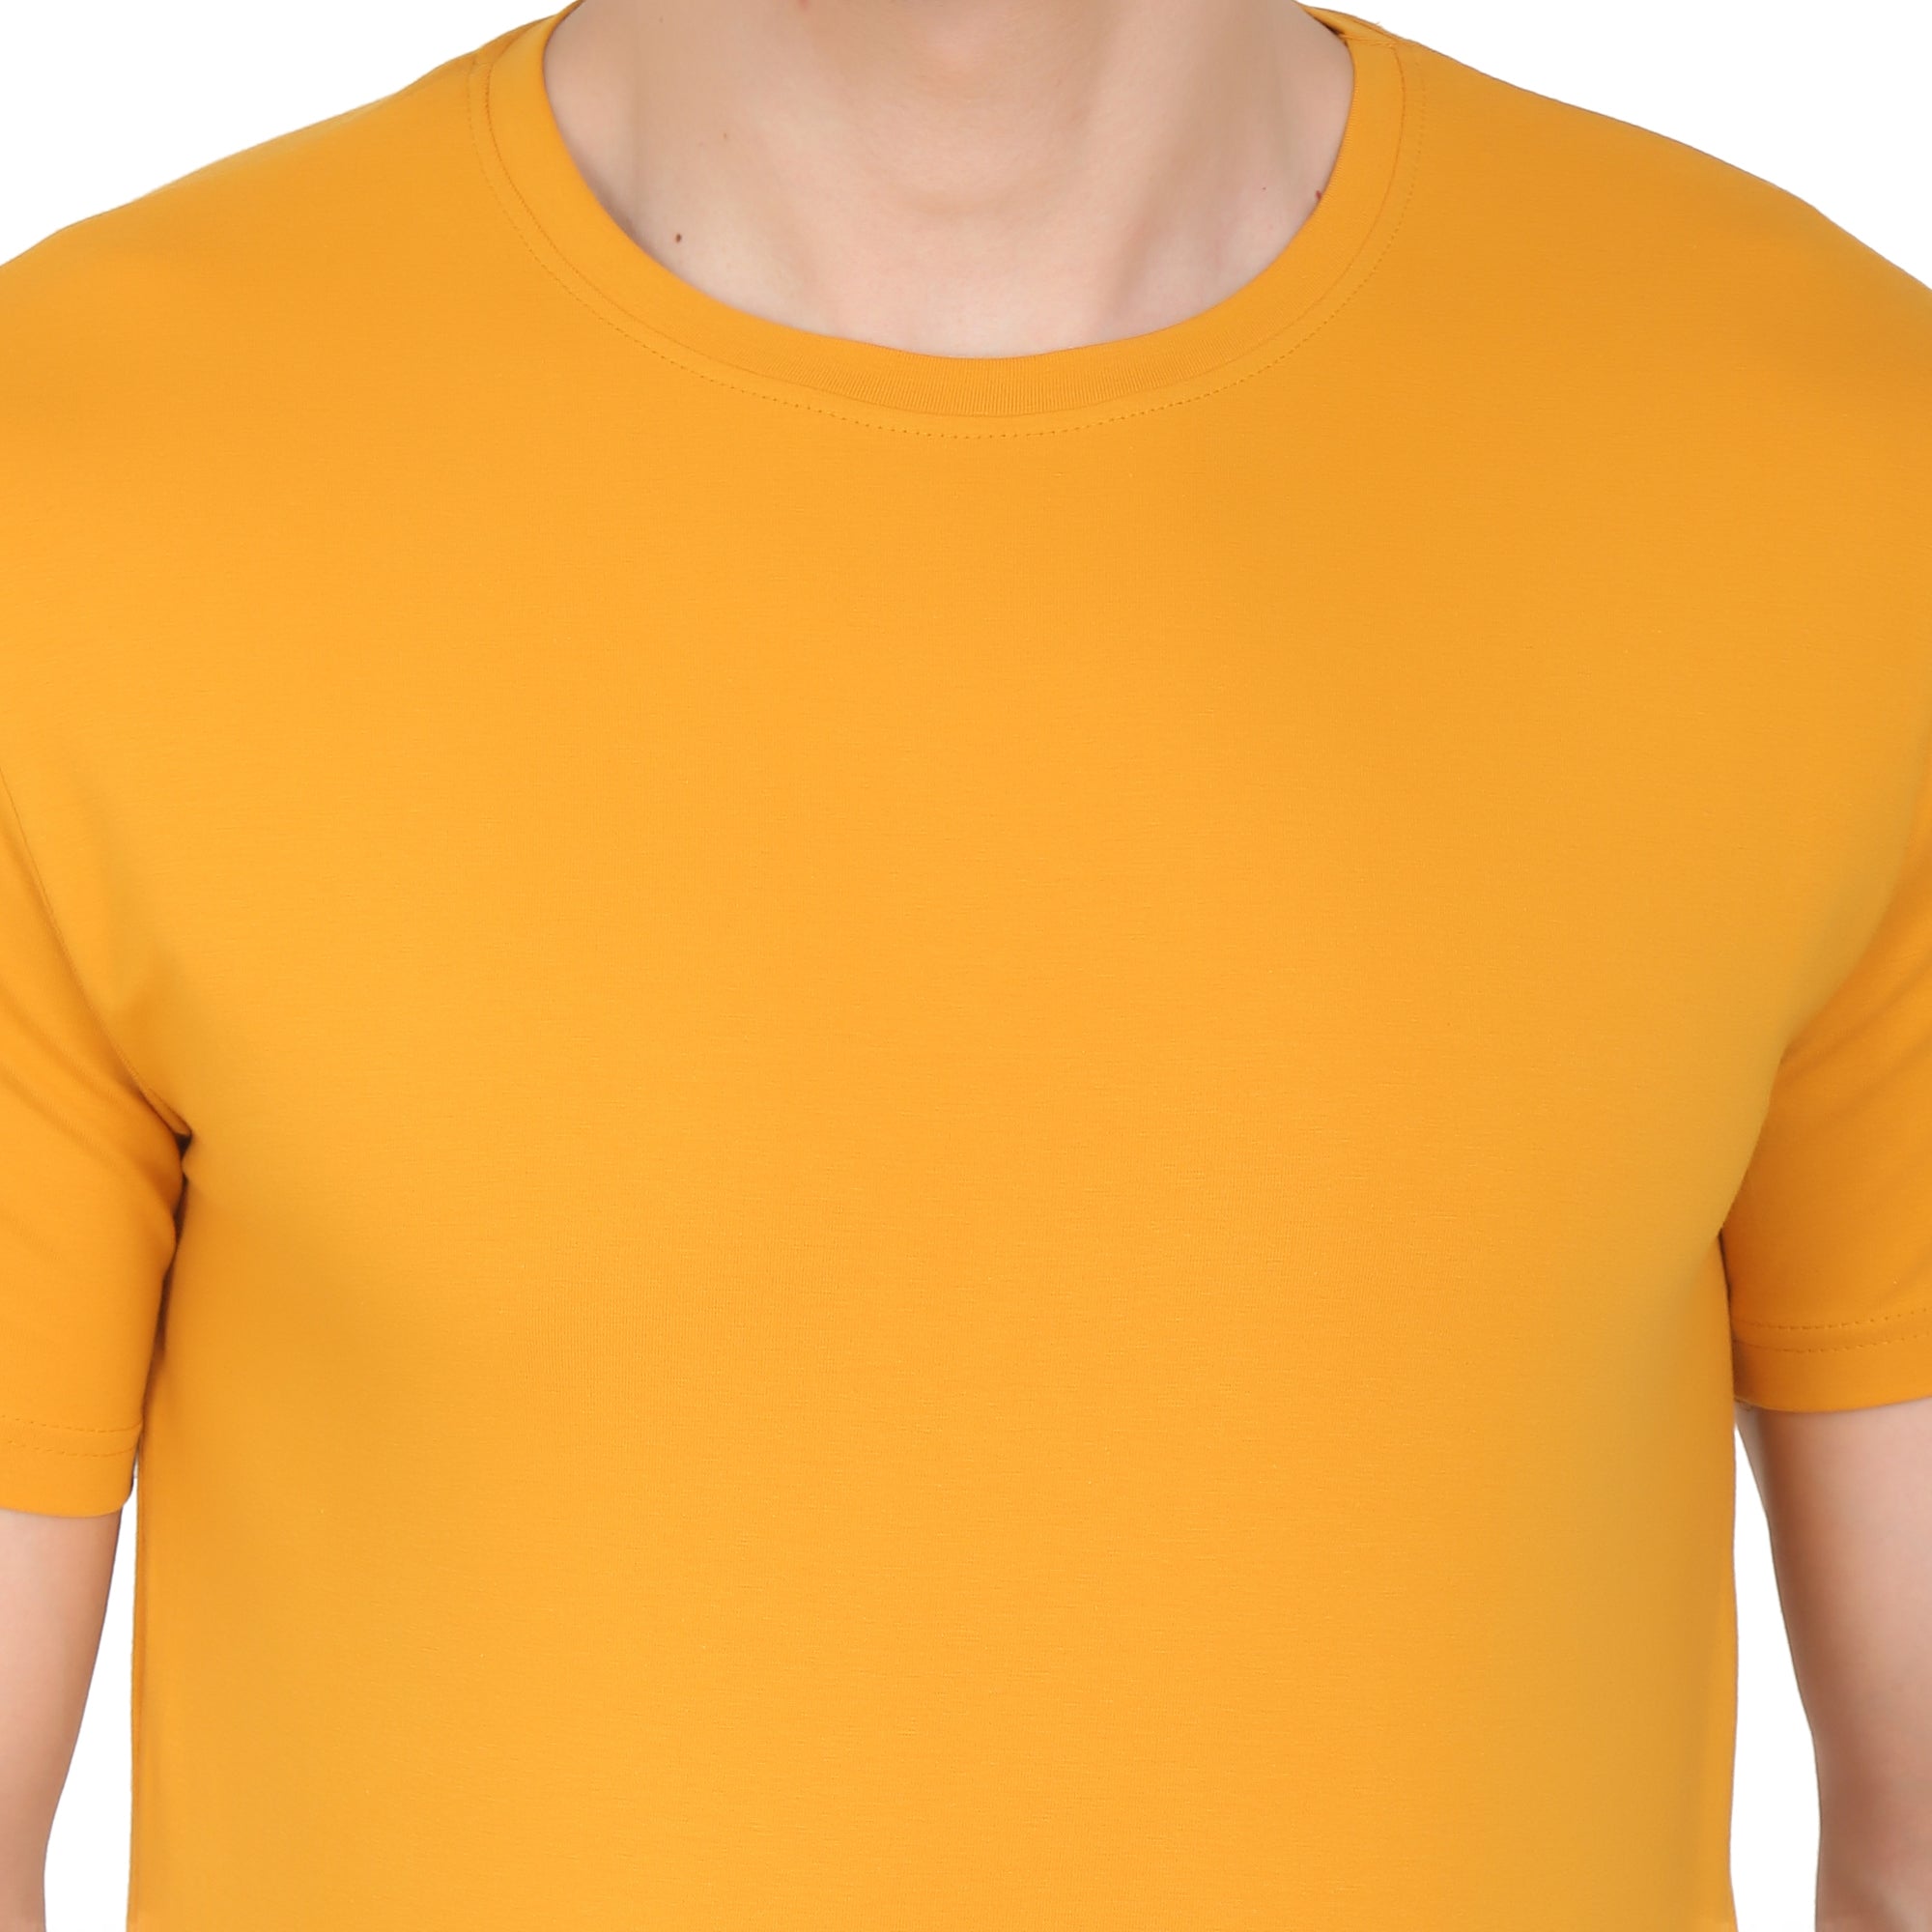 Men Four Way Stretch Cotton Plain T-shirt - Mustard Yellow Colour